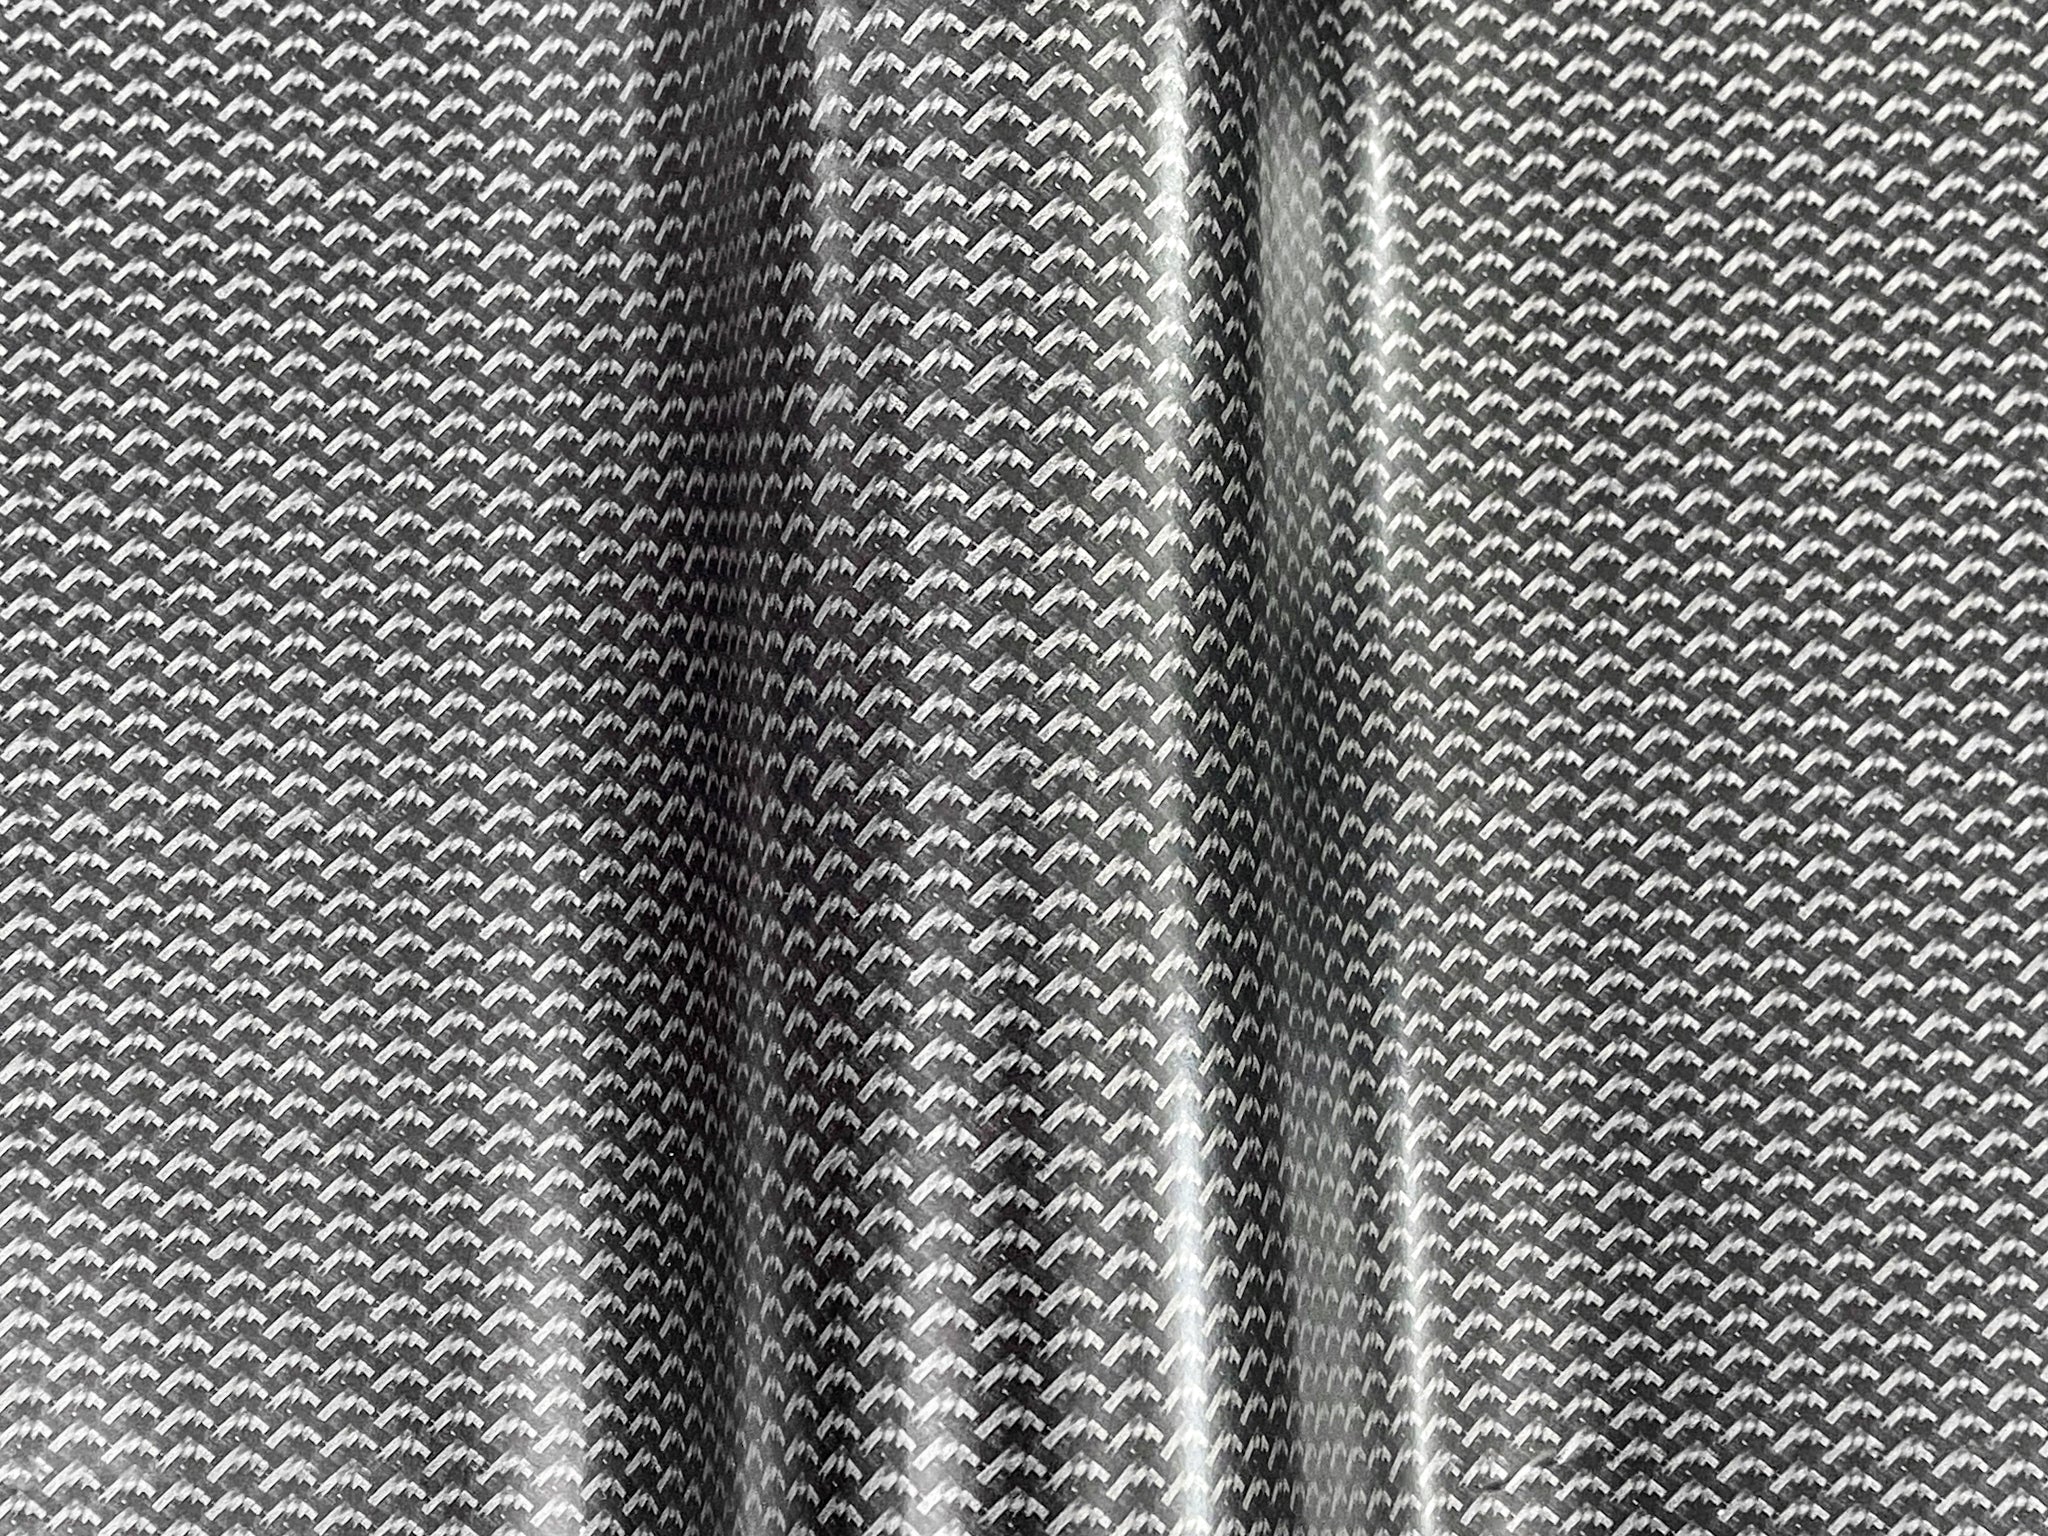 Gloss Carbon wrapvinyl Breedte 150 cm WRPD INC. - WrapGear